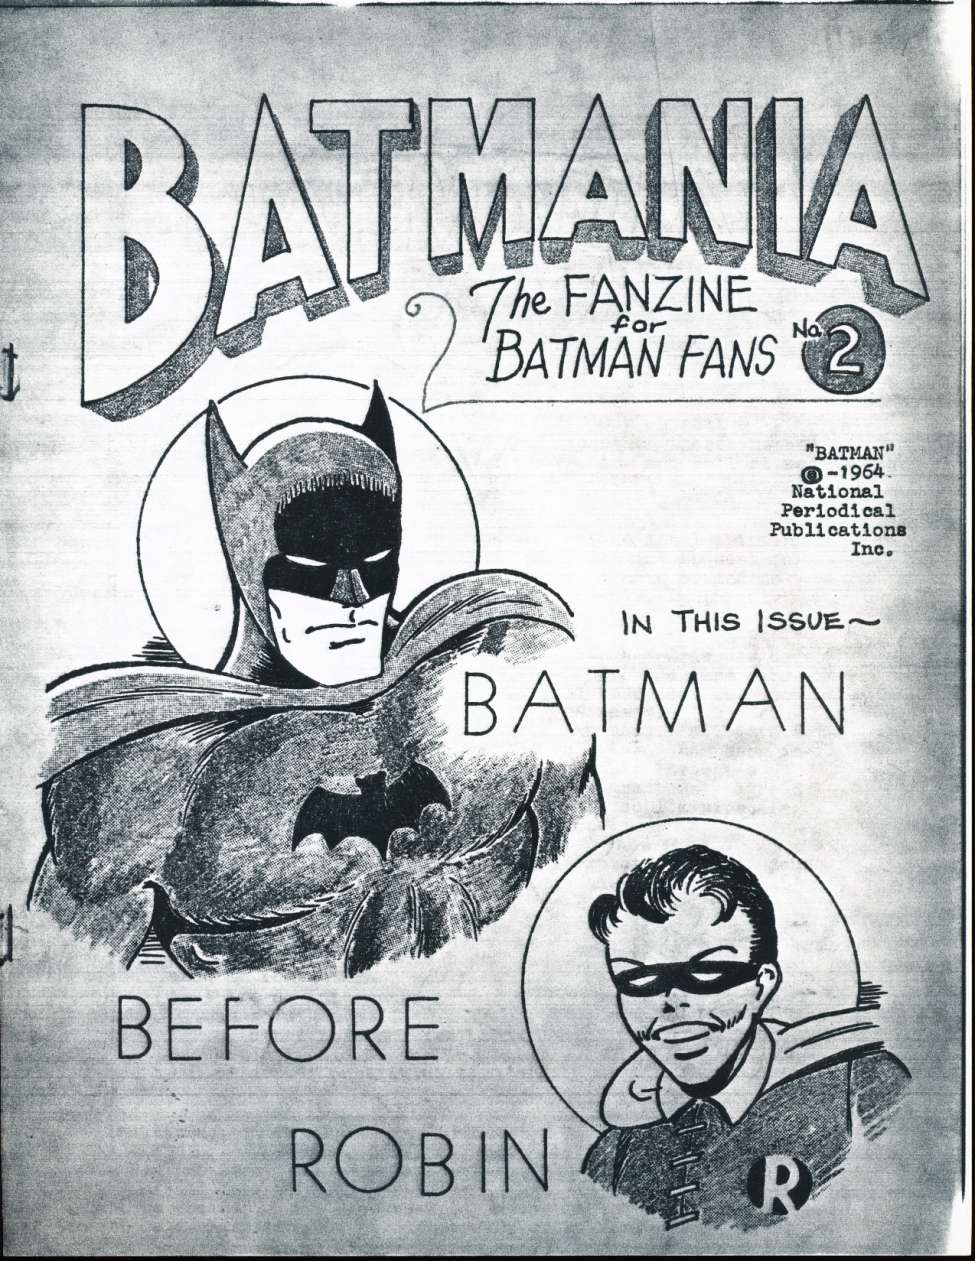 Book Cover For Batmania 2